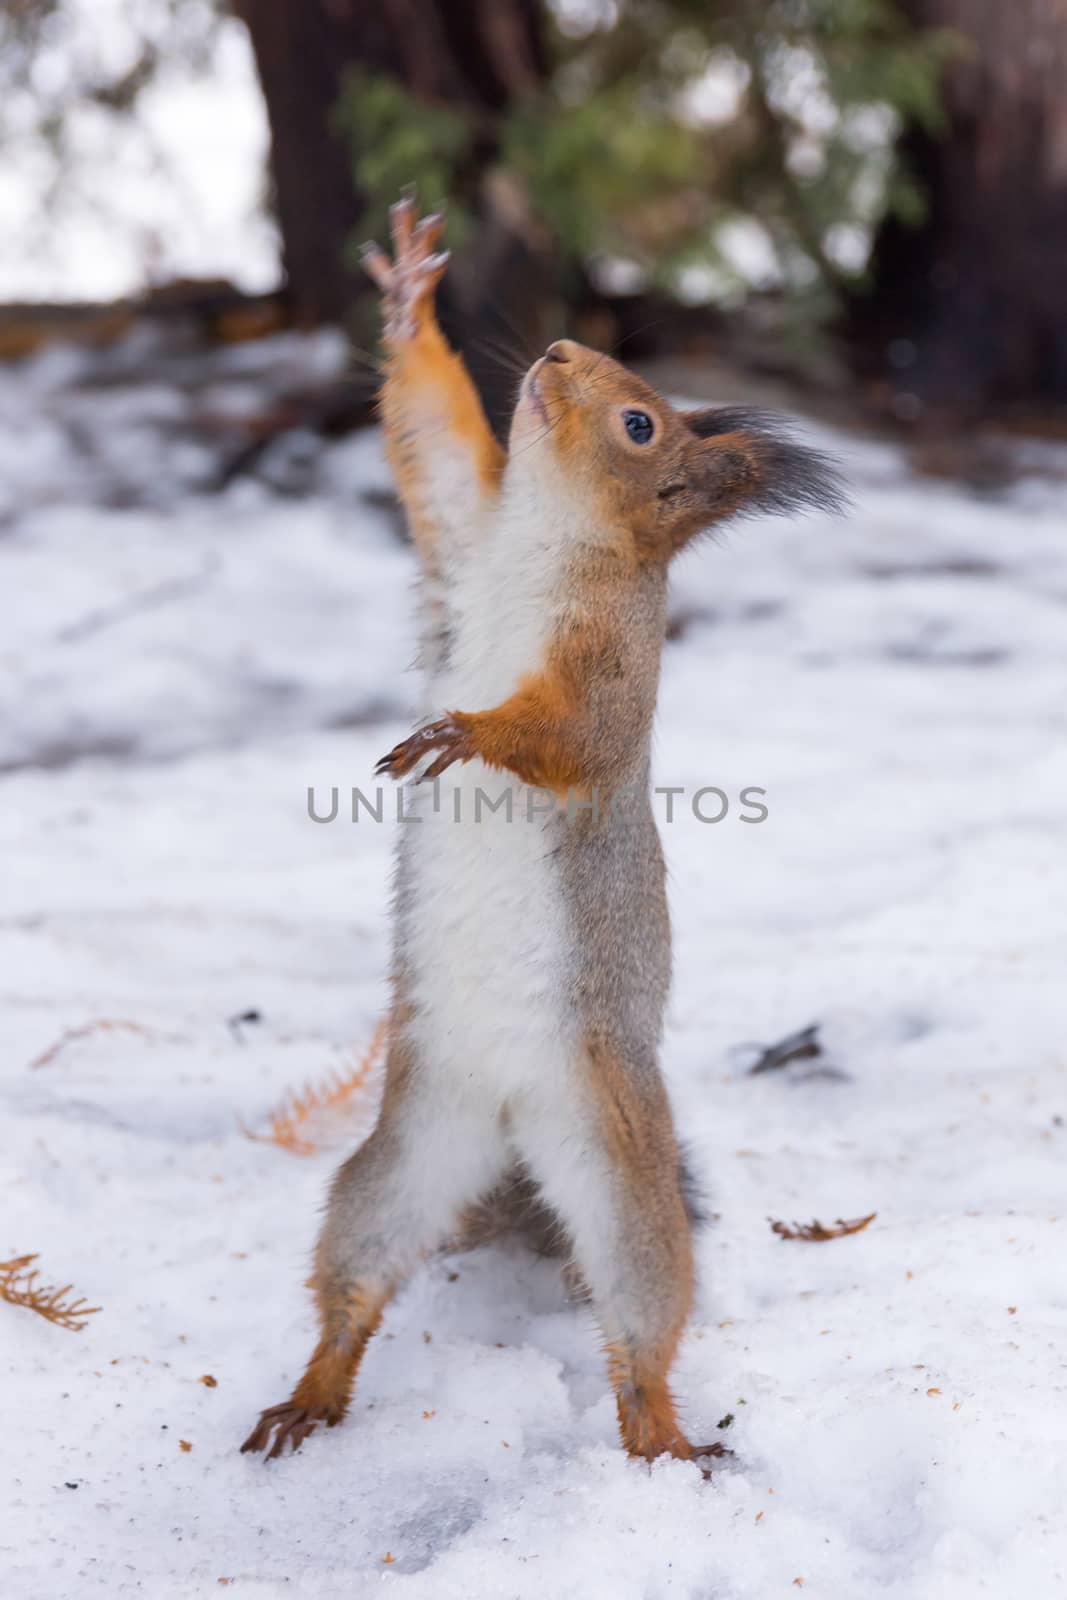 The photo shows a squirrel by AlexBush